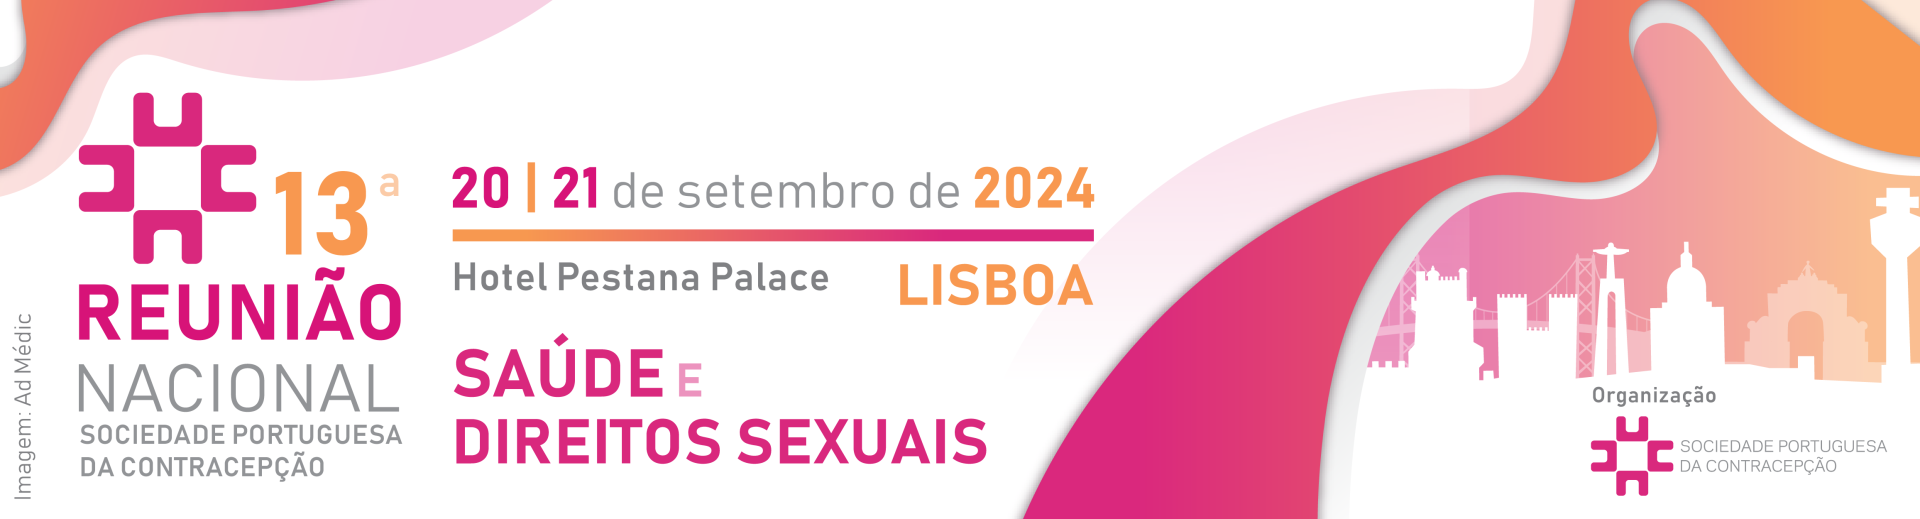 13 Reunio Nacional da Sociedade Portuguesa da Contracepo